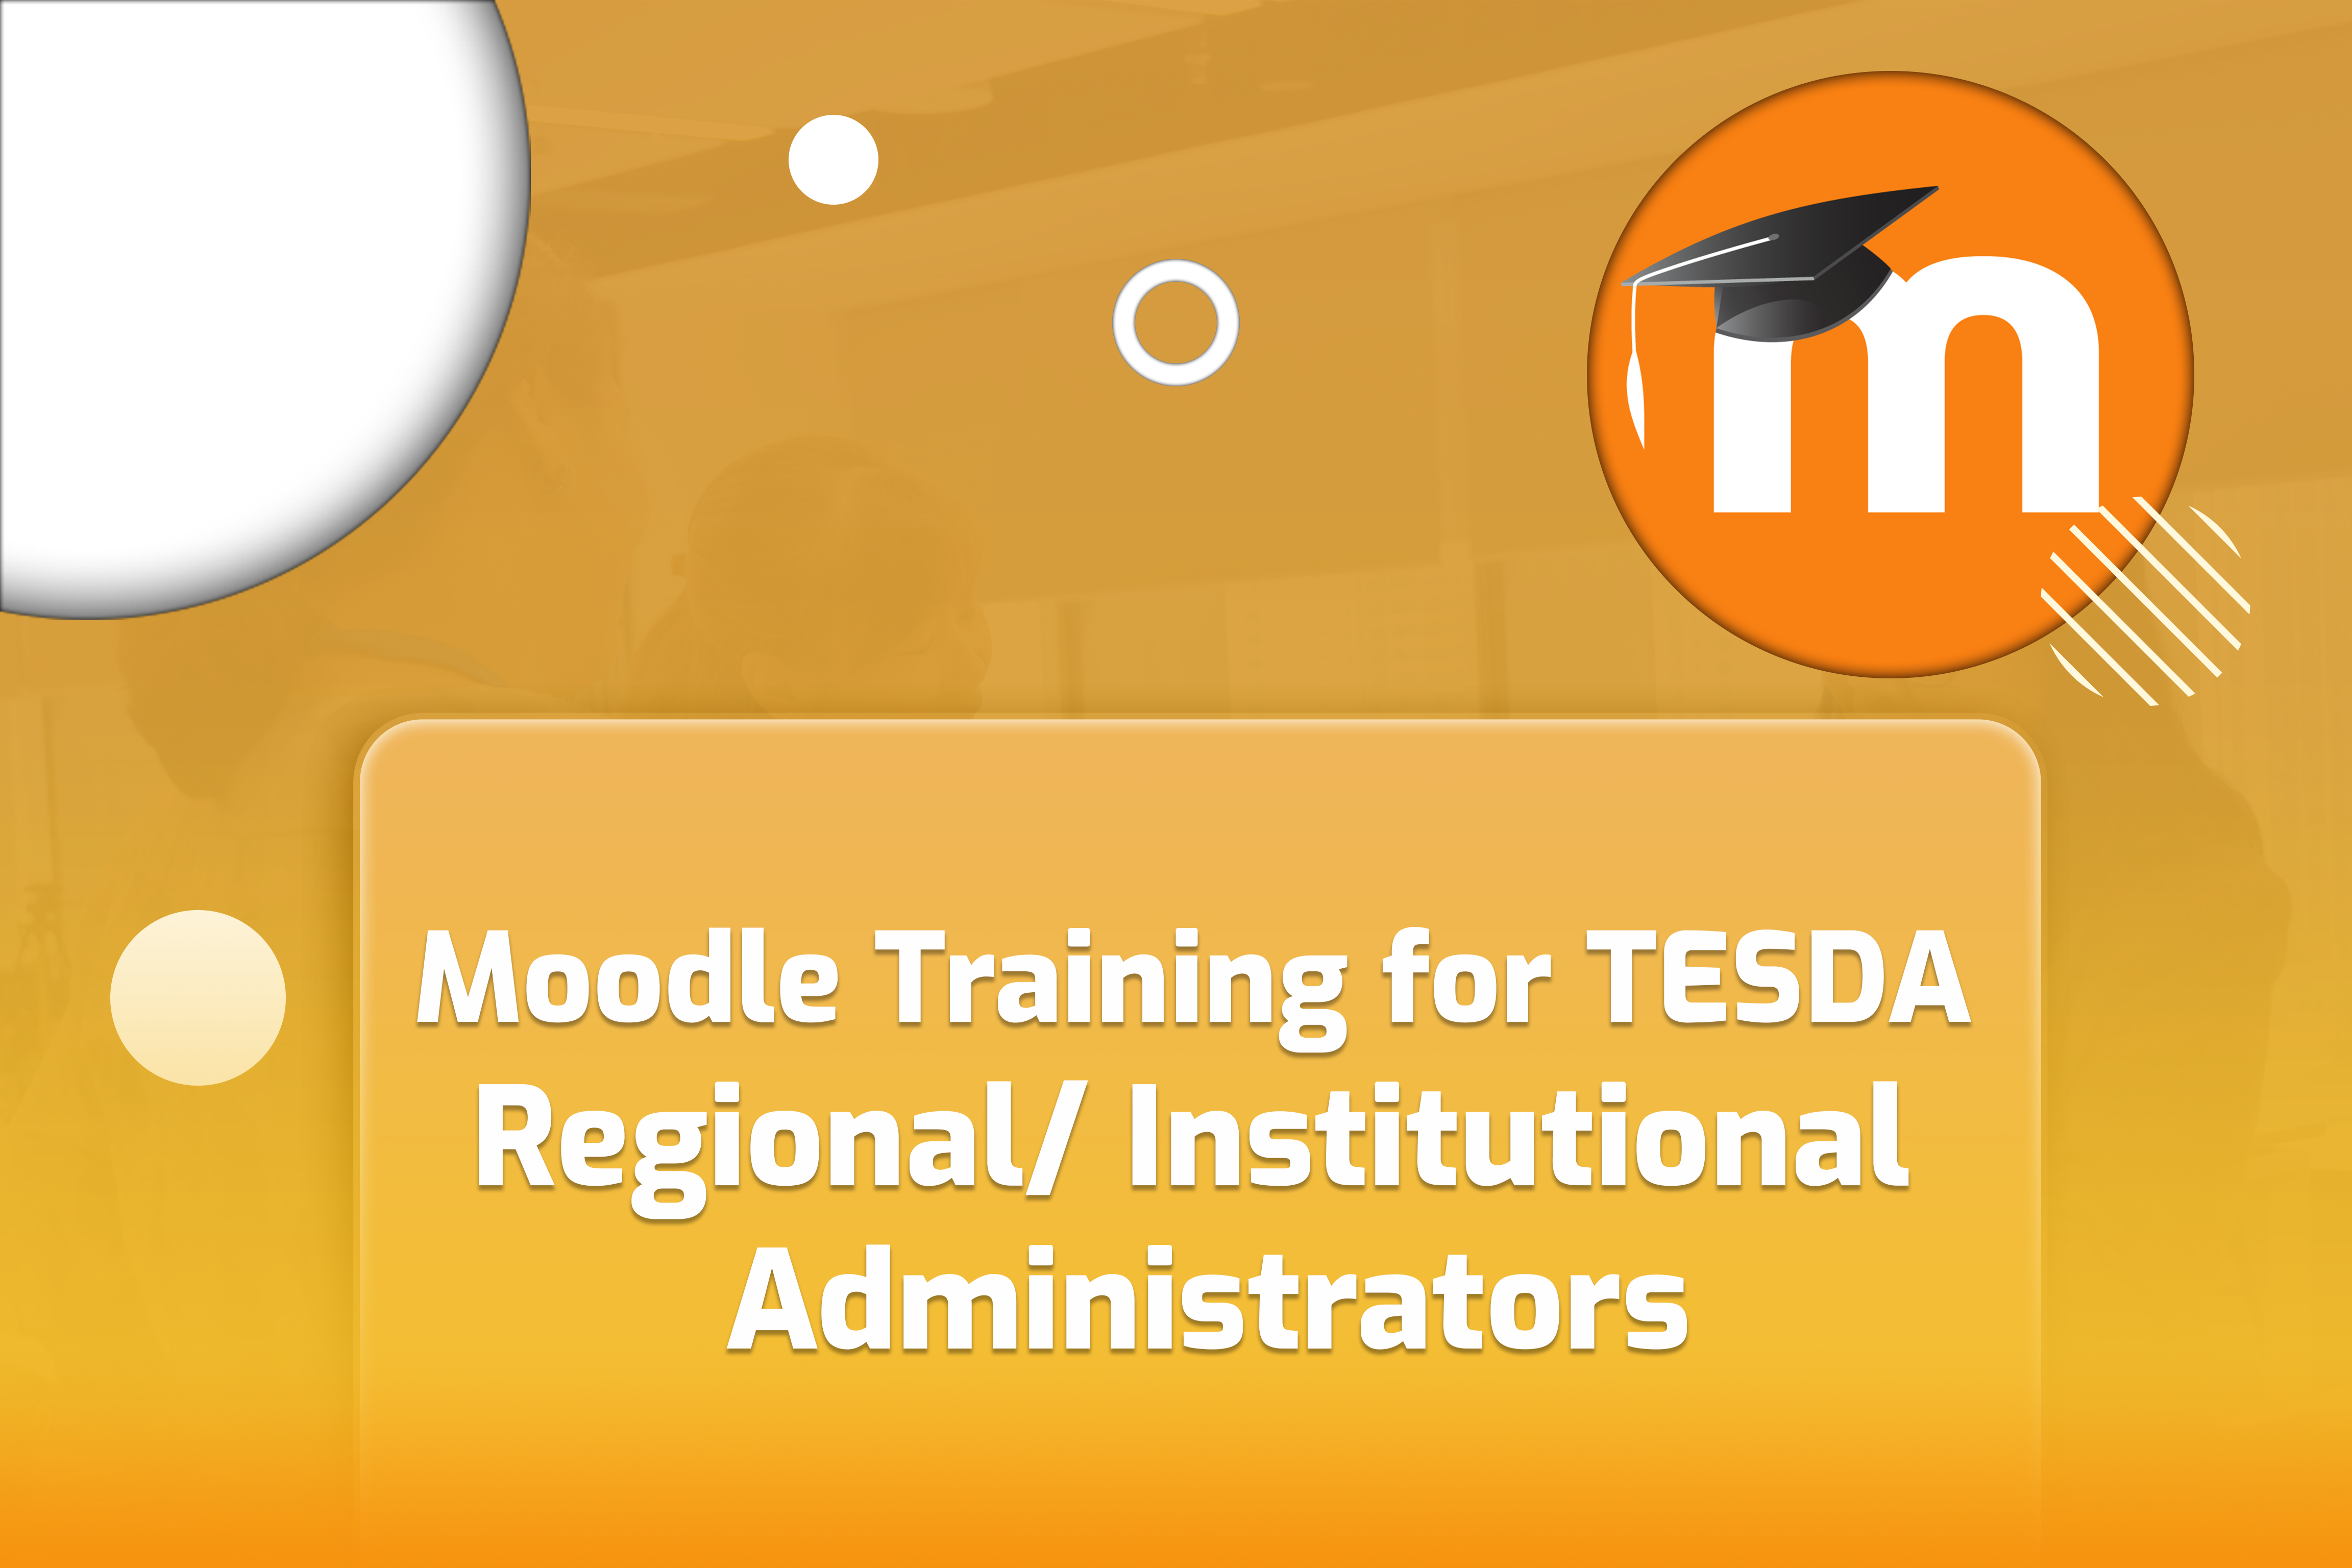  Moodle Training for TESDA Regional/Institutional Administrators